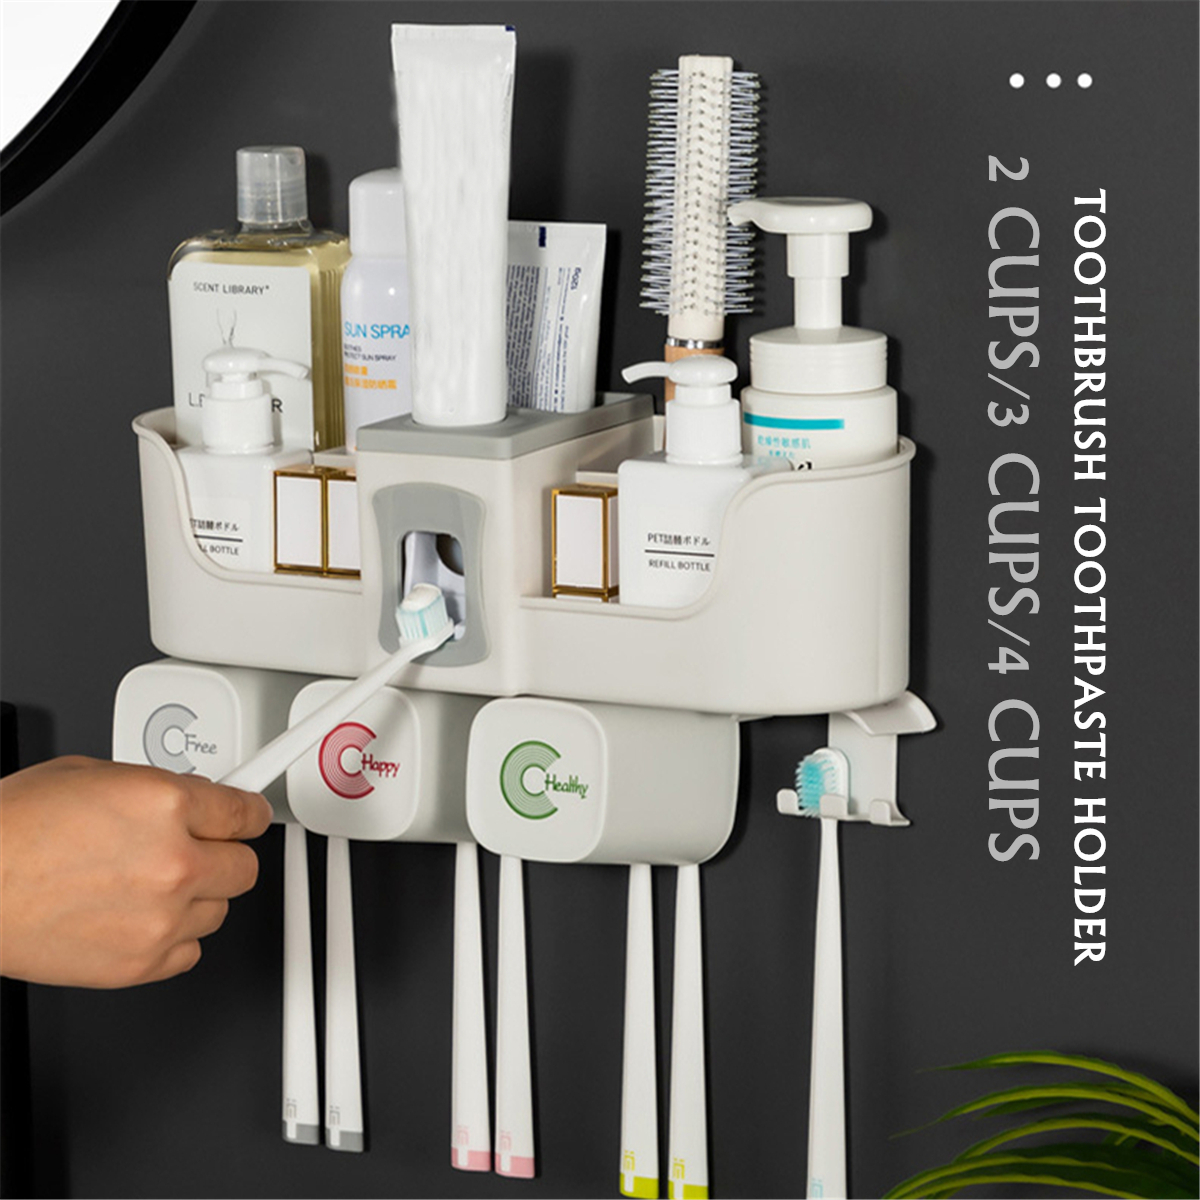 Wall-Mount-Toothbrush-Holder-Auto-Toothpaste-Dispenser-234-Cup-Holder-Organizer-Set-1696207-1